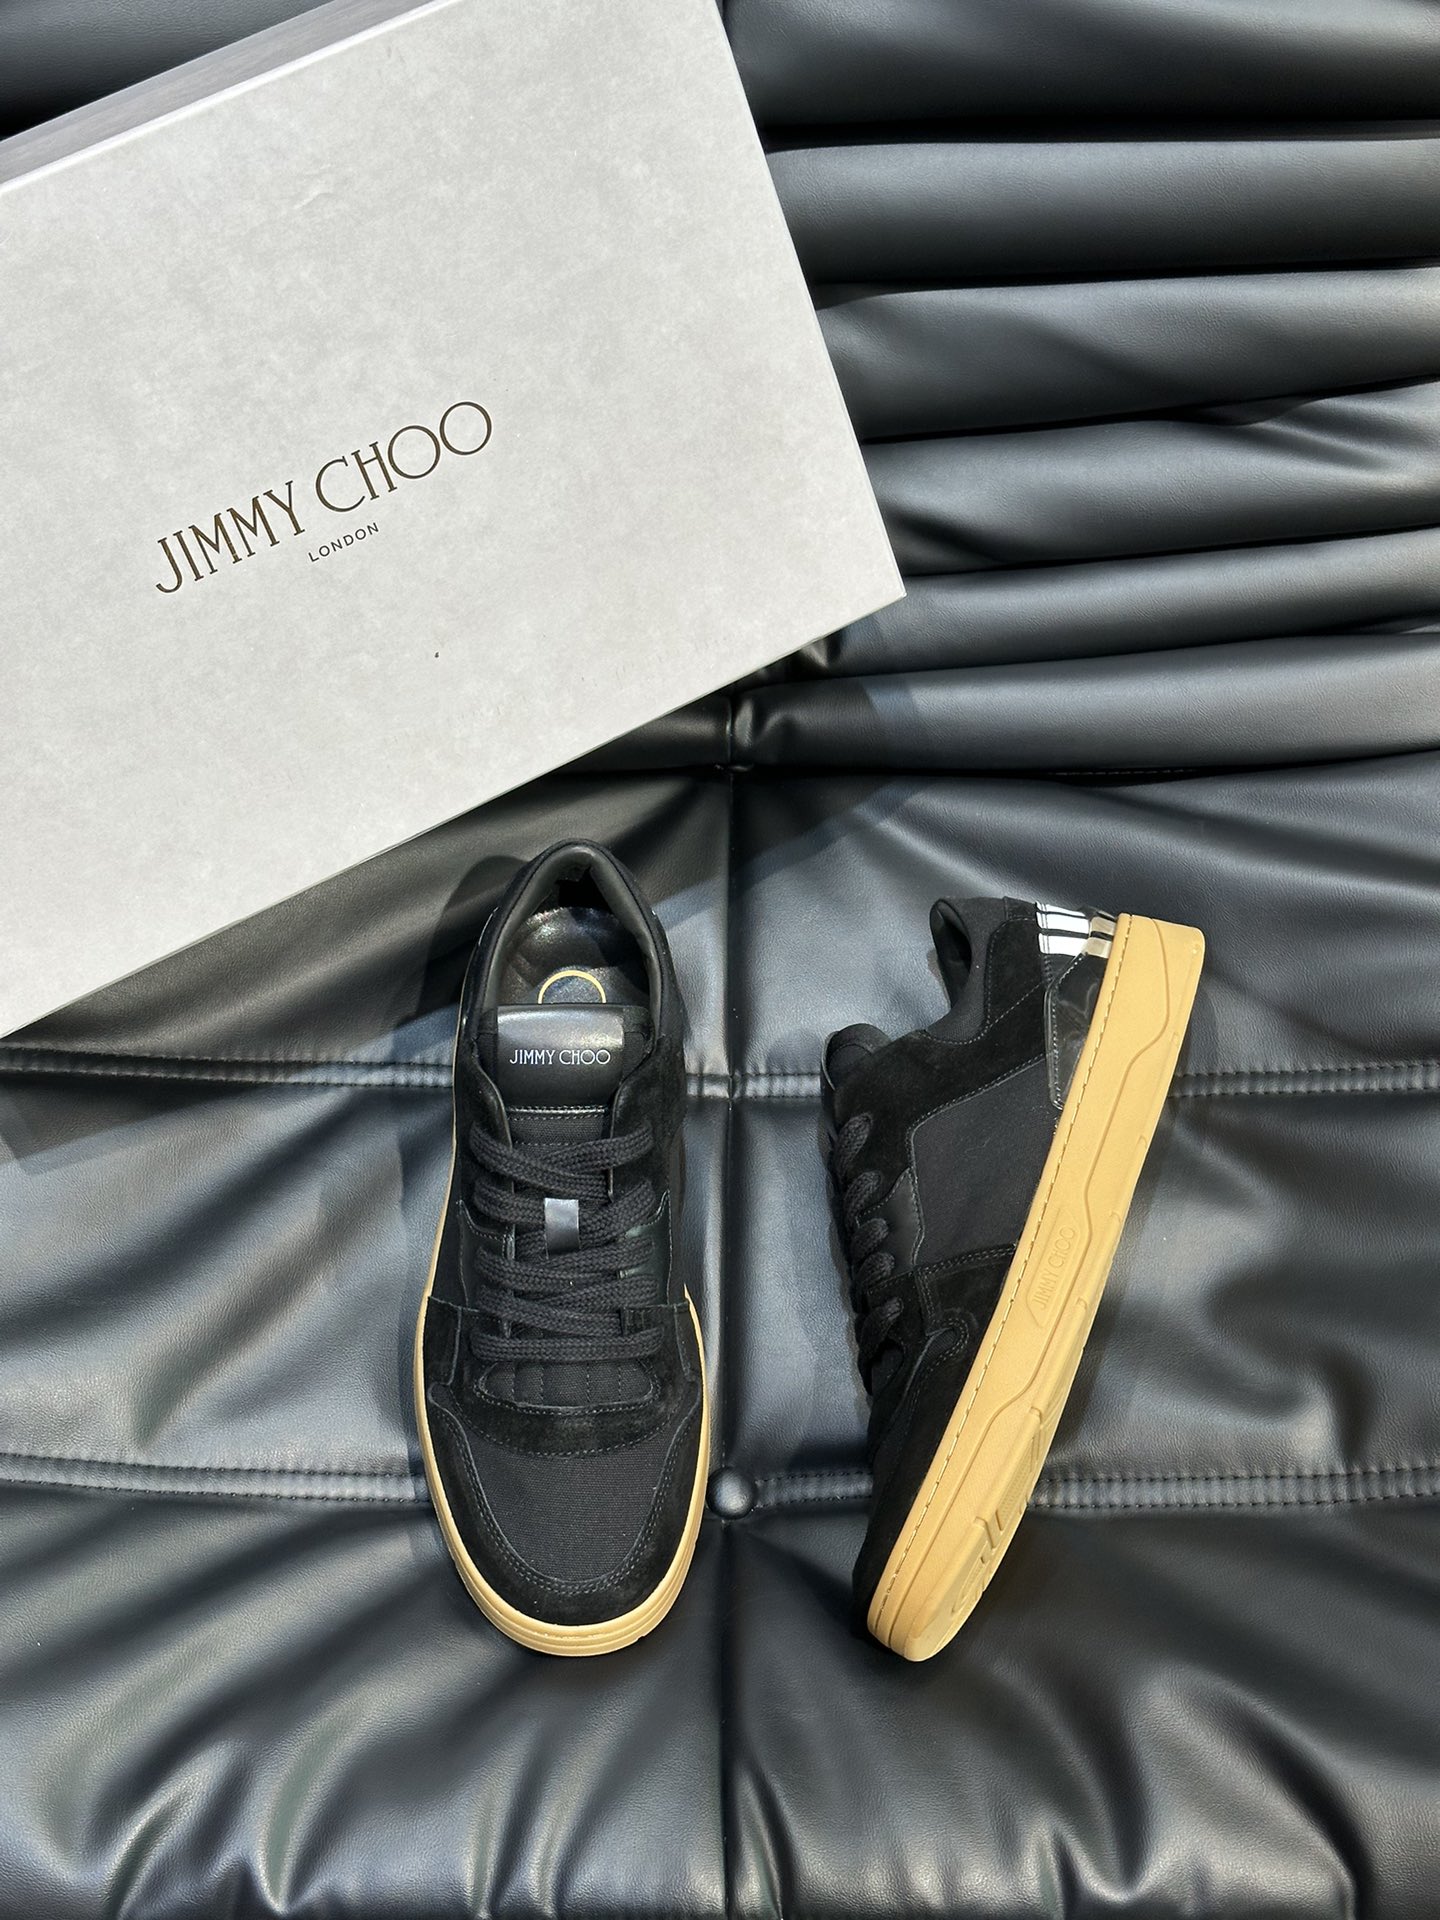 JIMMYCHOO新款高端男士DIAMONDLIGHT系列时尚运动鞋重新演绎品牌复古风经典鞋型本款运动鞋